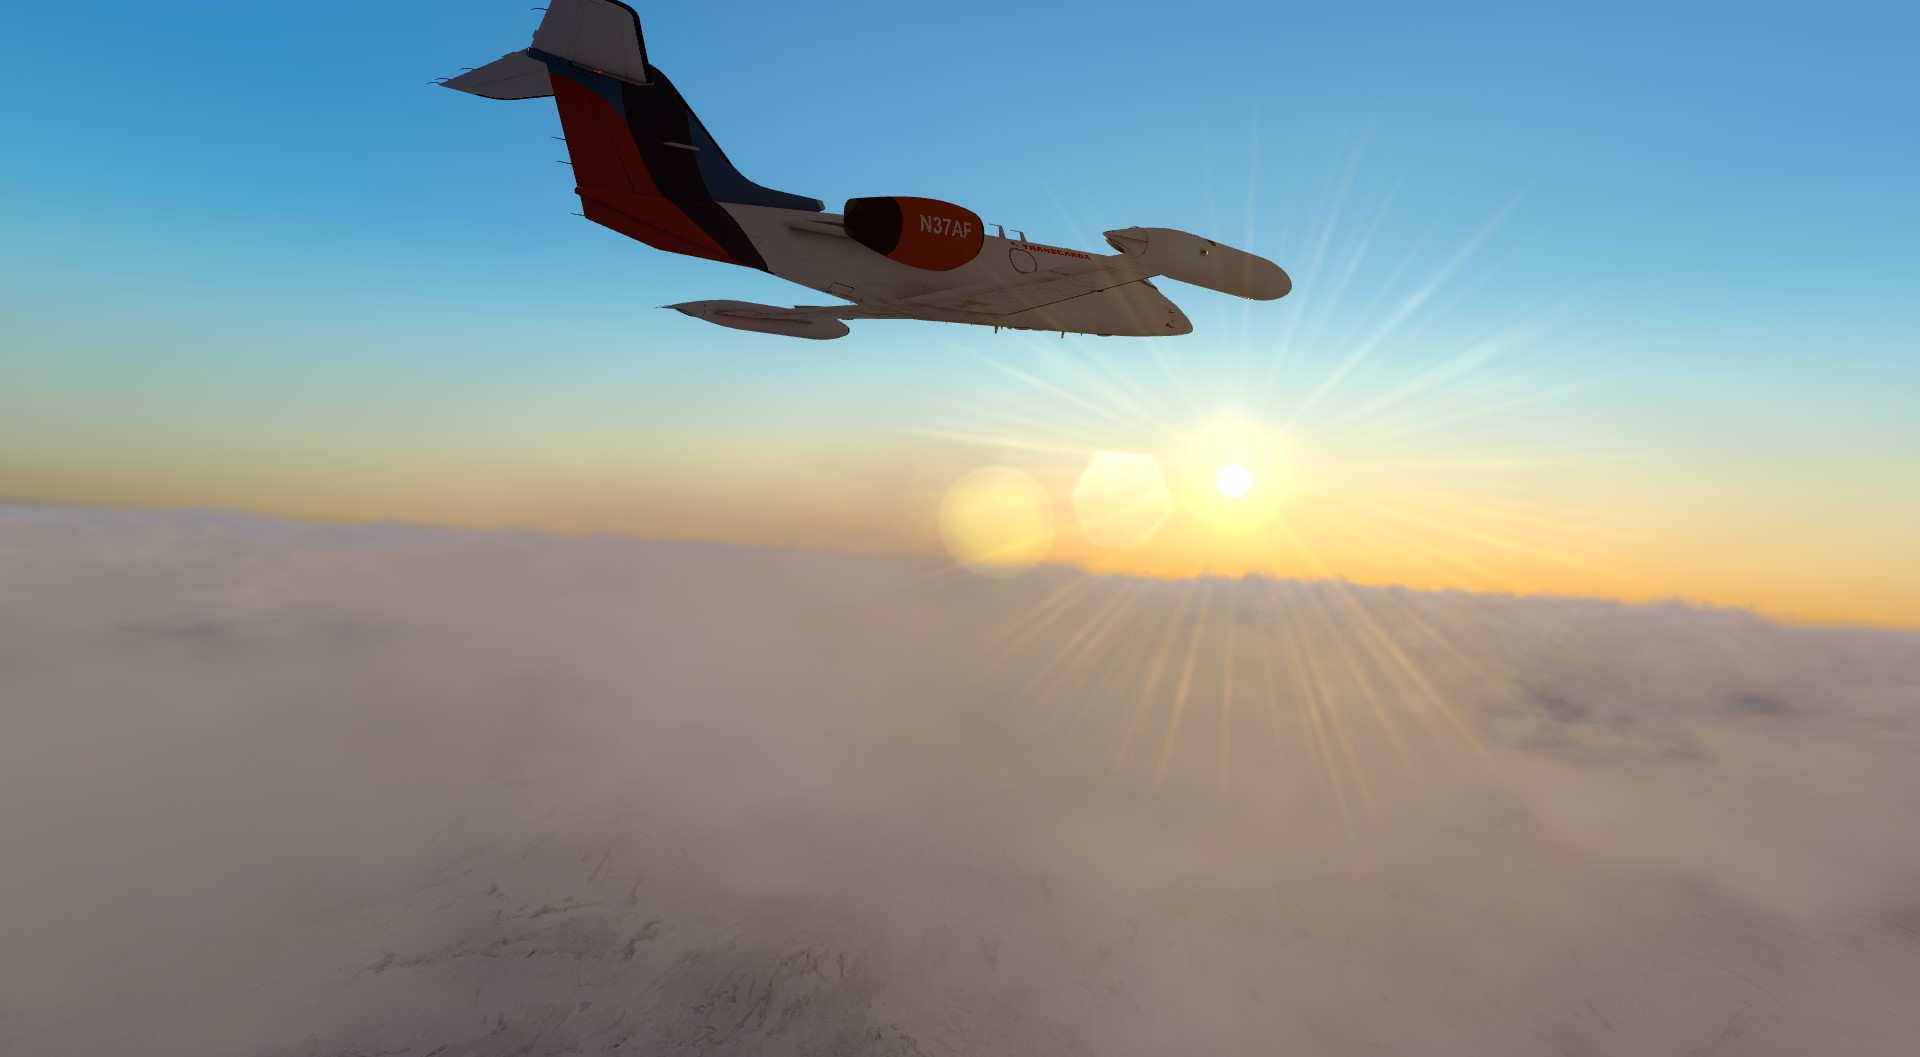 Flysimware – Learjet 35A 评测与冰岛送货之旅-8753 